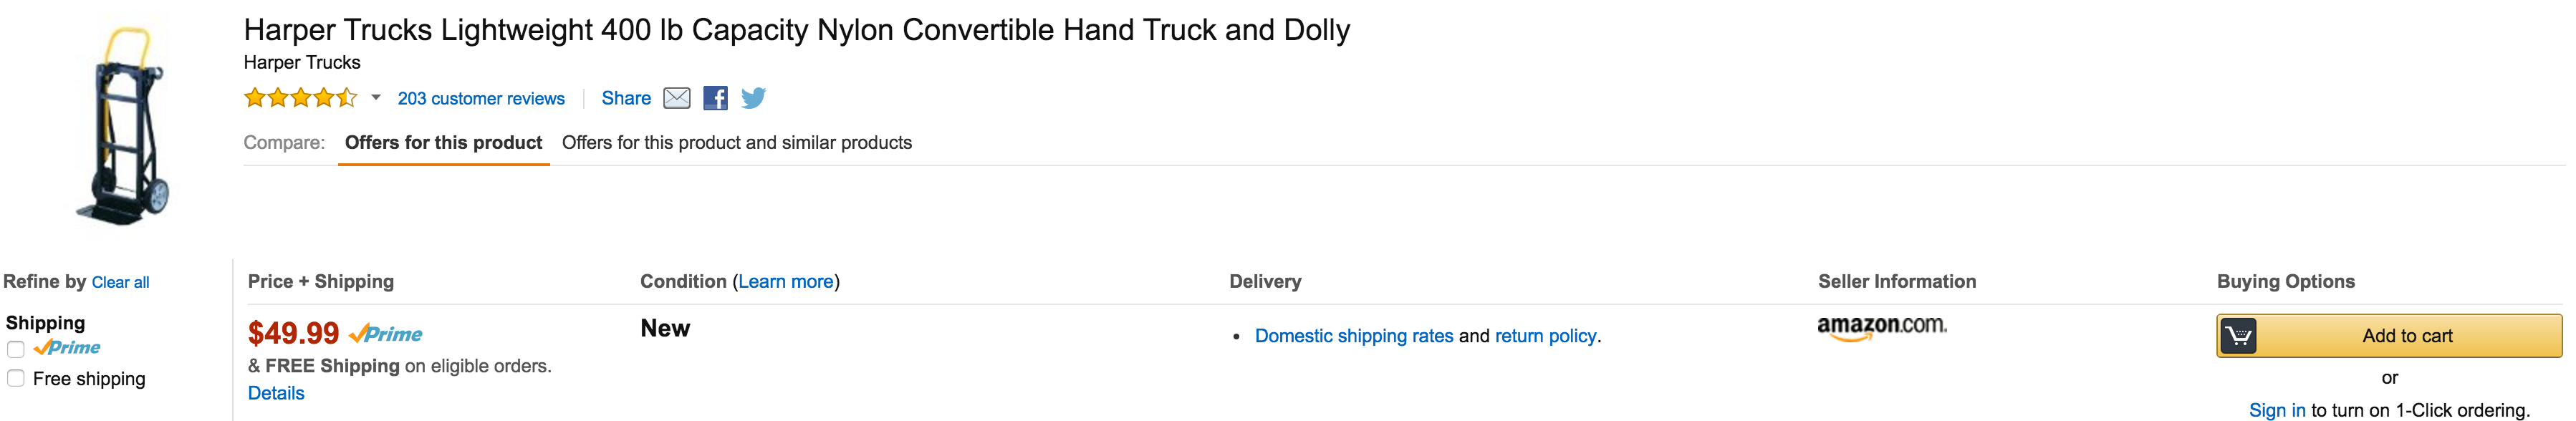 Harper Trucks� Lighweight Nylon Convertible Hand Truck and Dolly 